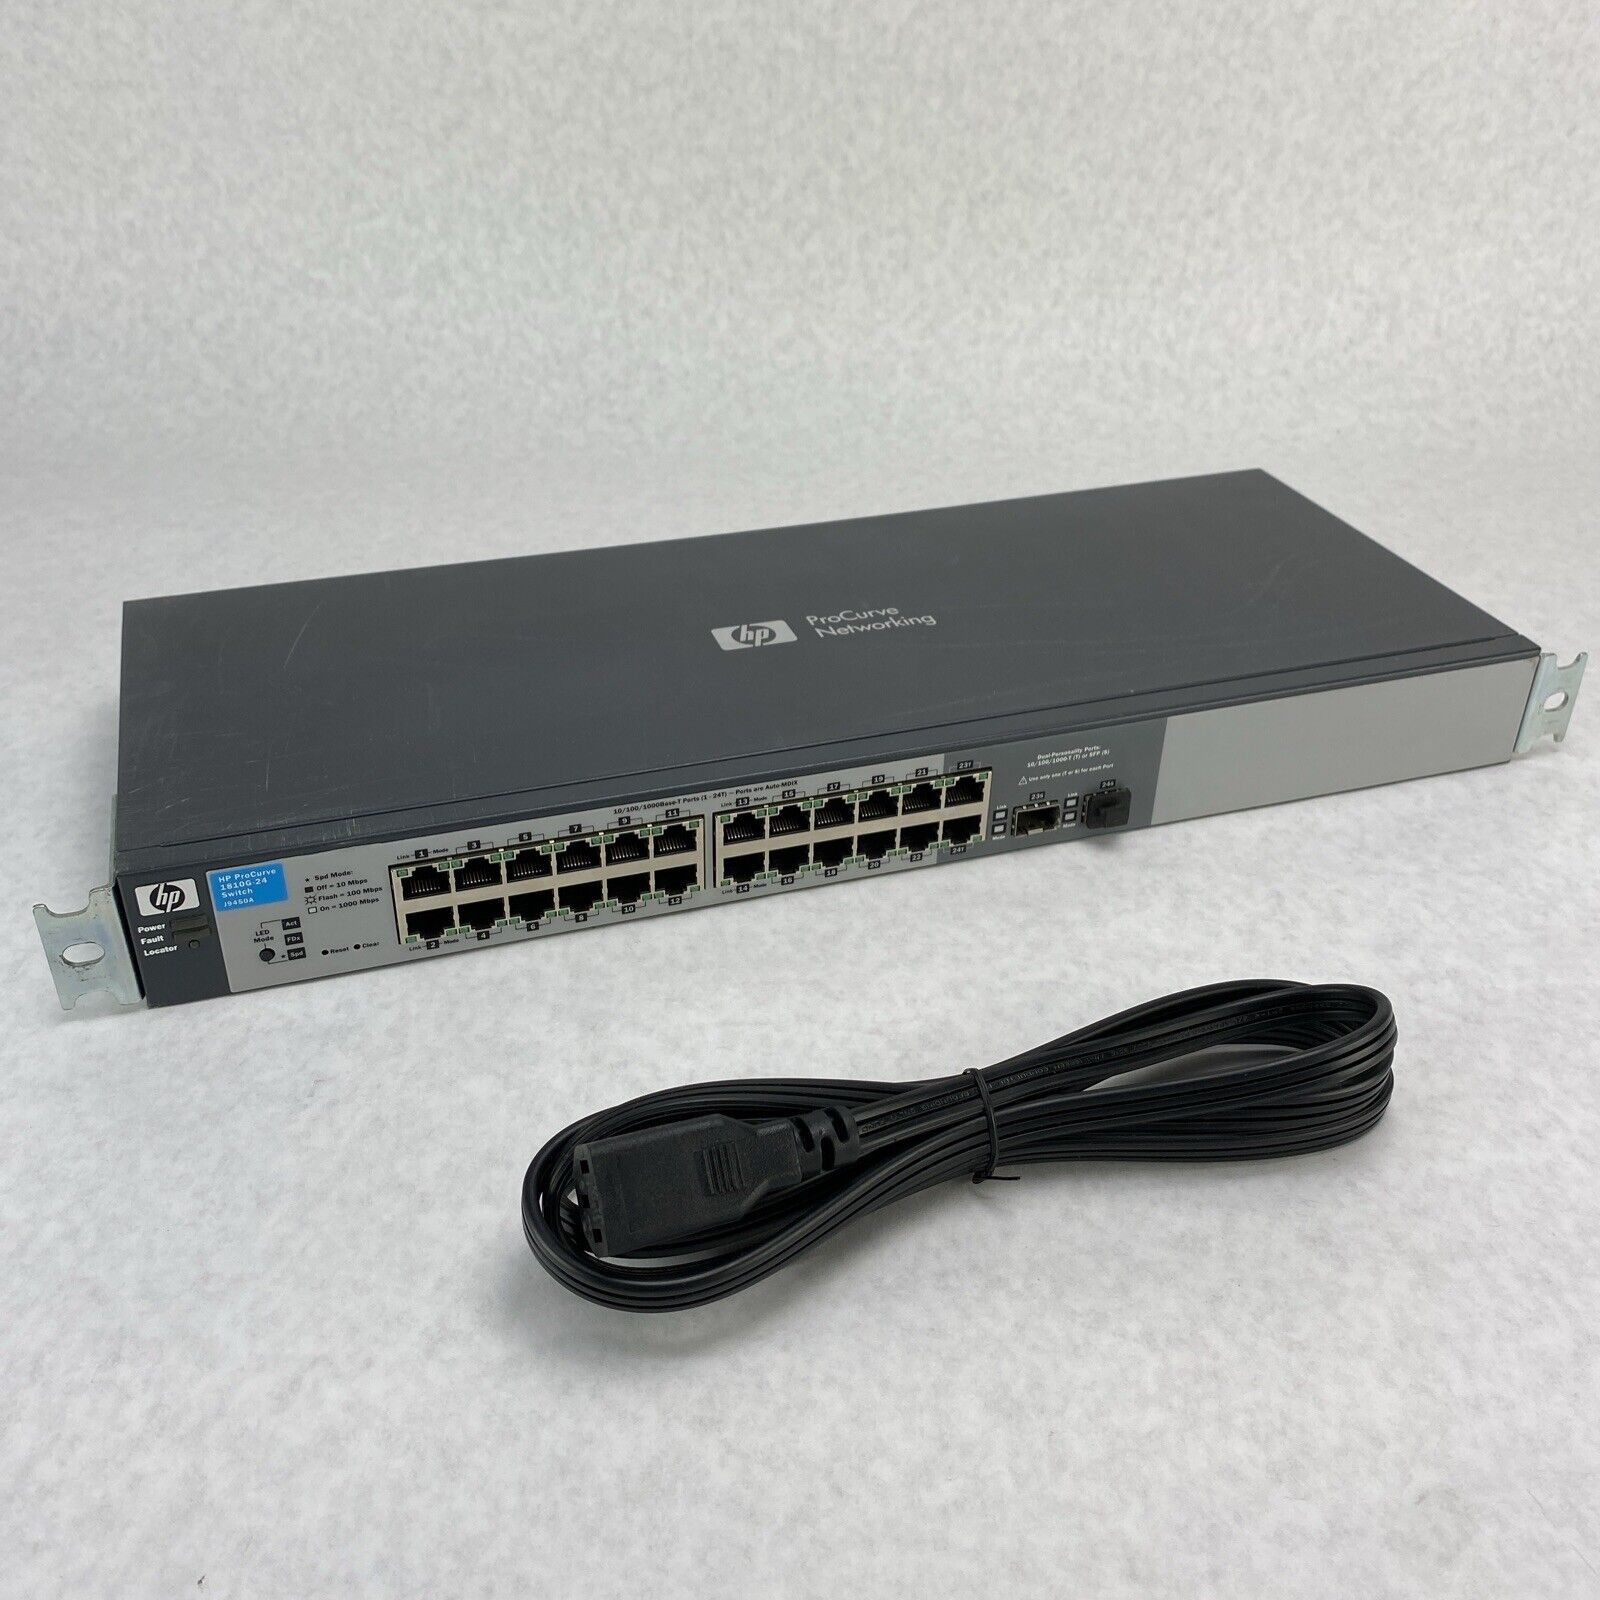 HP J9450A ProCurve 1810G-24 24-Port Gigabit Ethernet Switch w/ Power Adapter